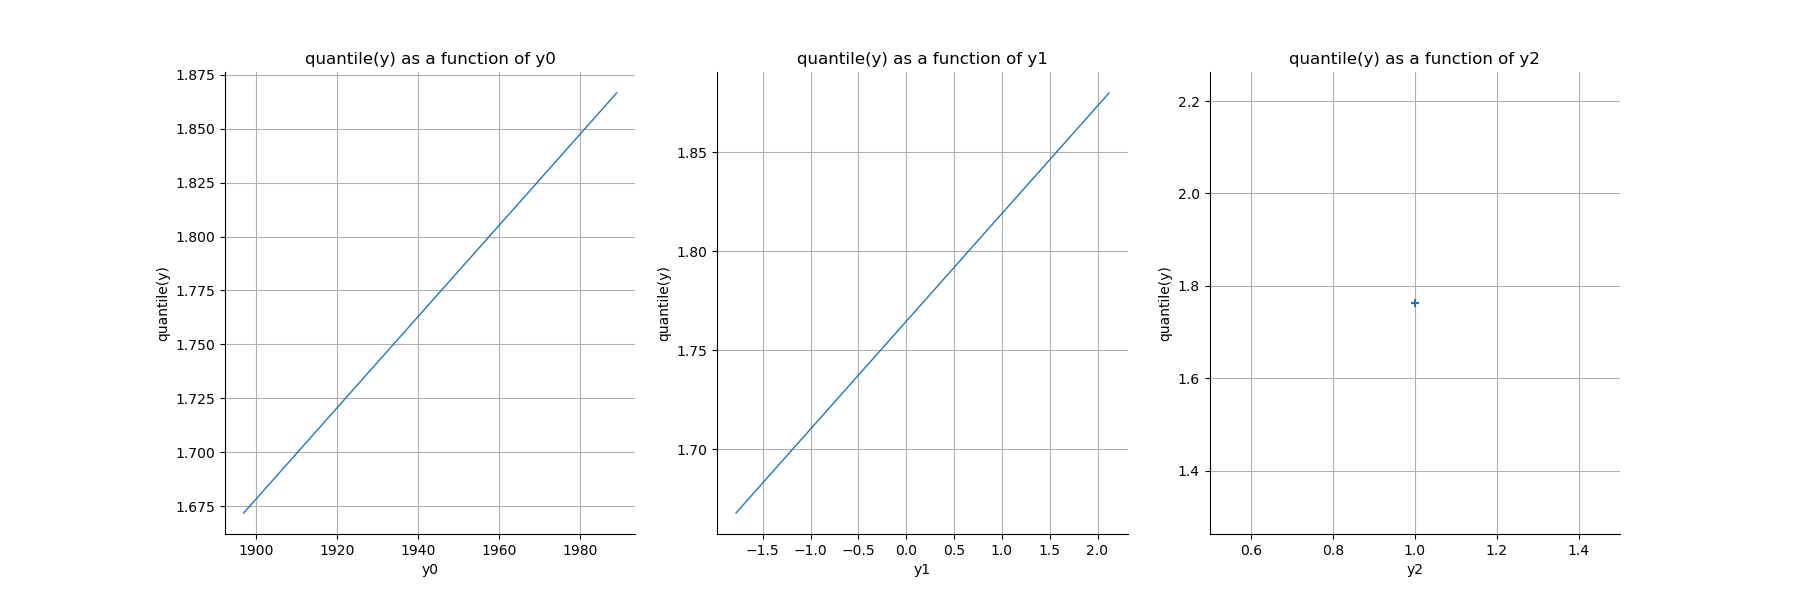 , quantile(y) as a function of y0, quantile(y) as a function of y1, quantile(y) as a function of y2